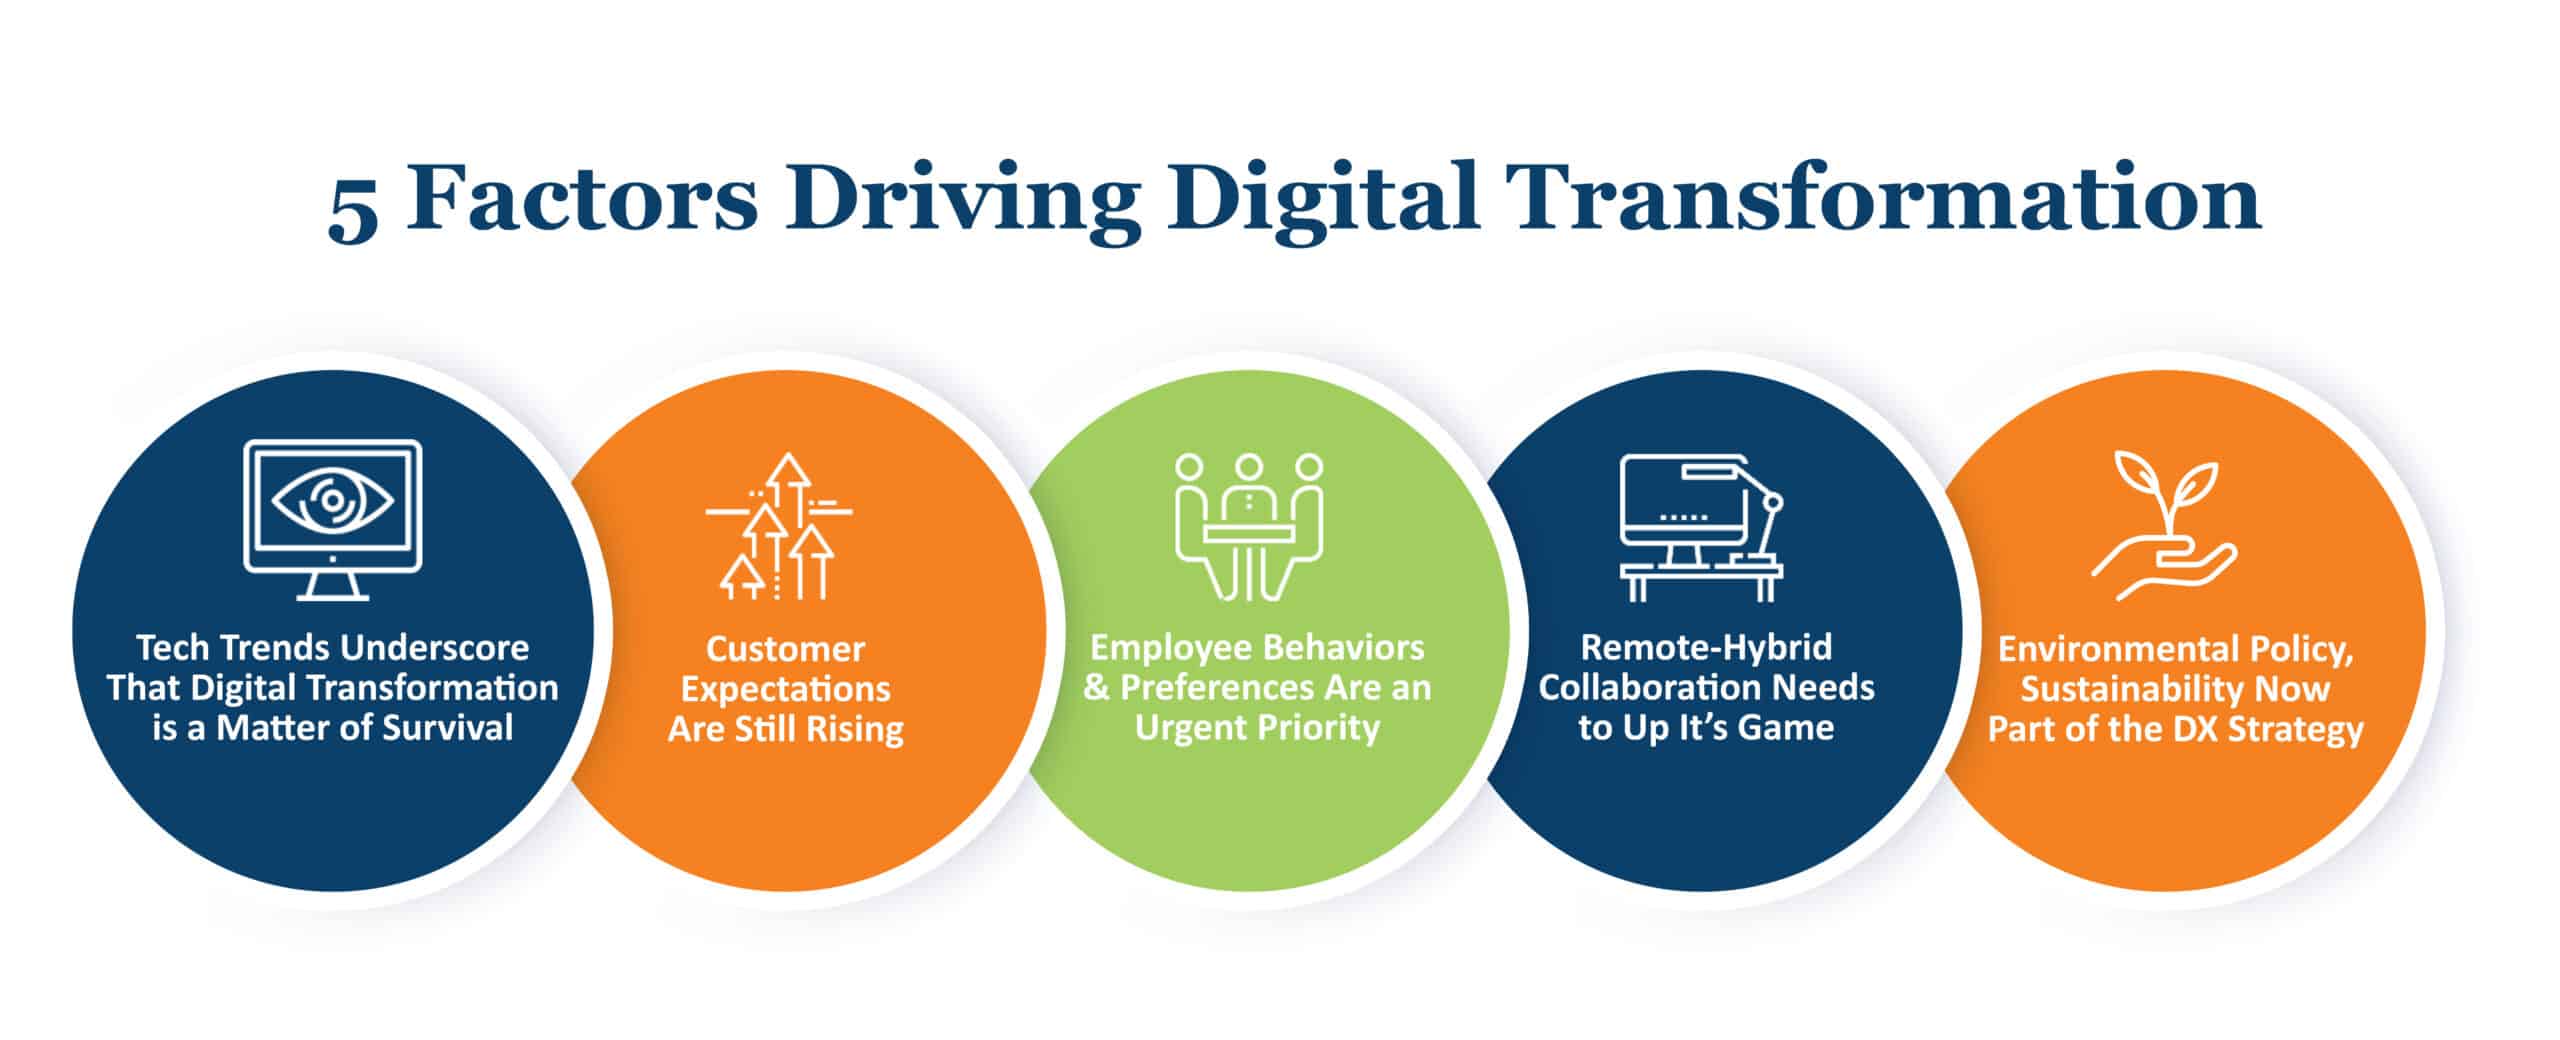 5 Factors Driving Digital Transformation Today